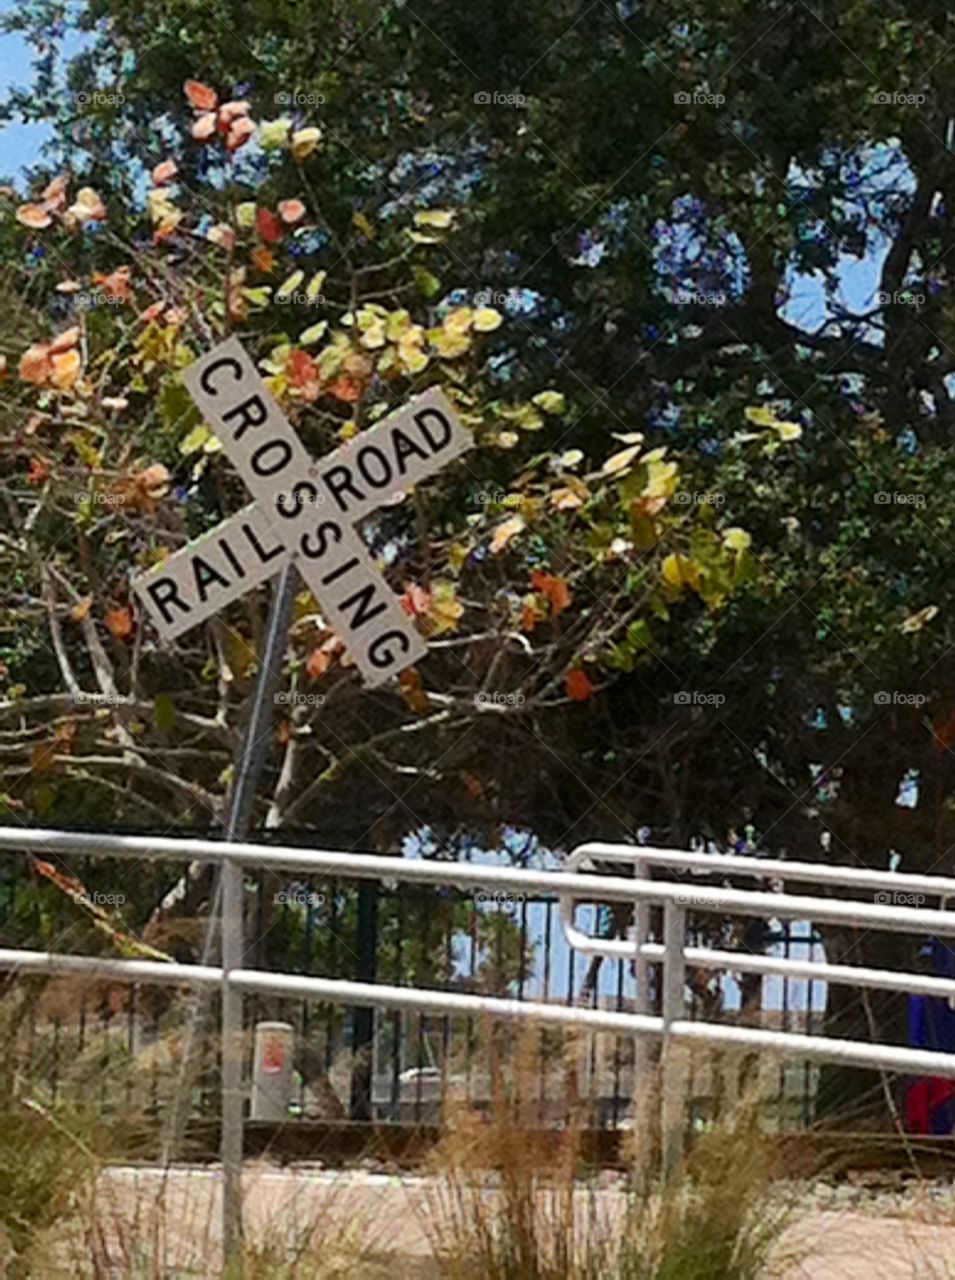 Railroad Crossing